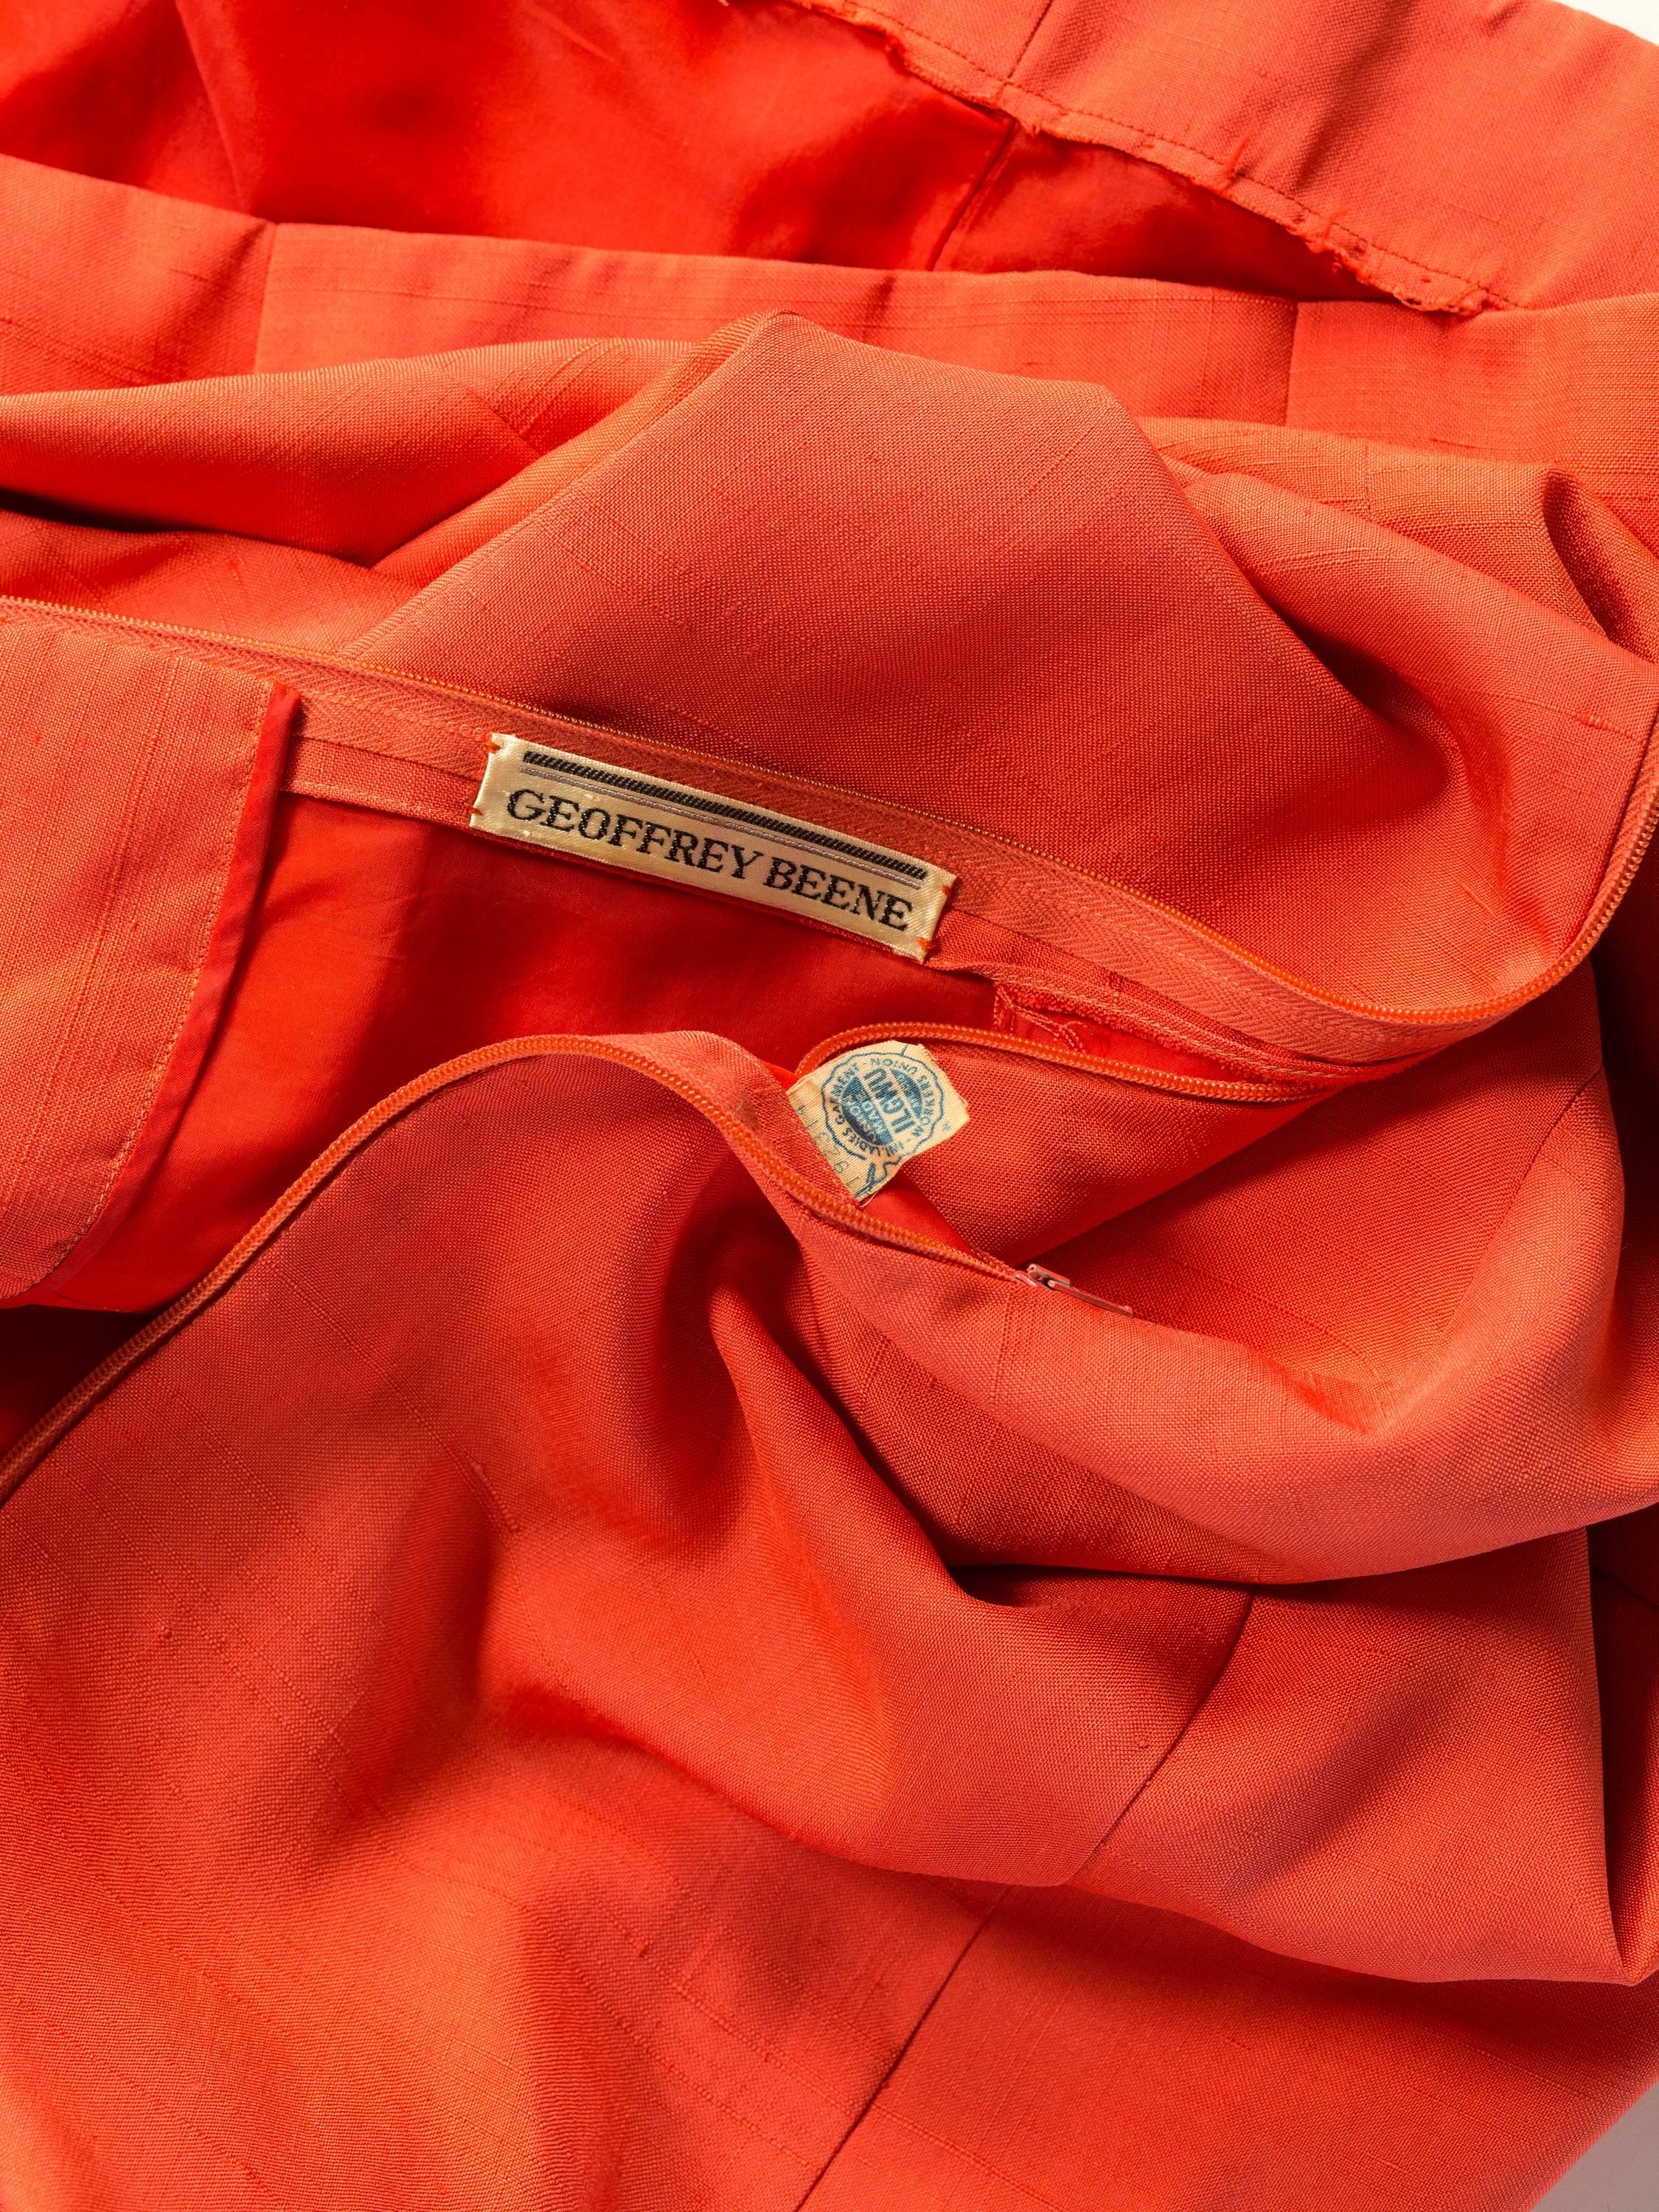 1960S GEOFFREY BEENE Coral Silk Mod Sheath Dress For Sale 4